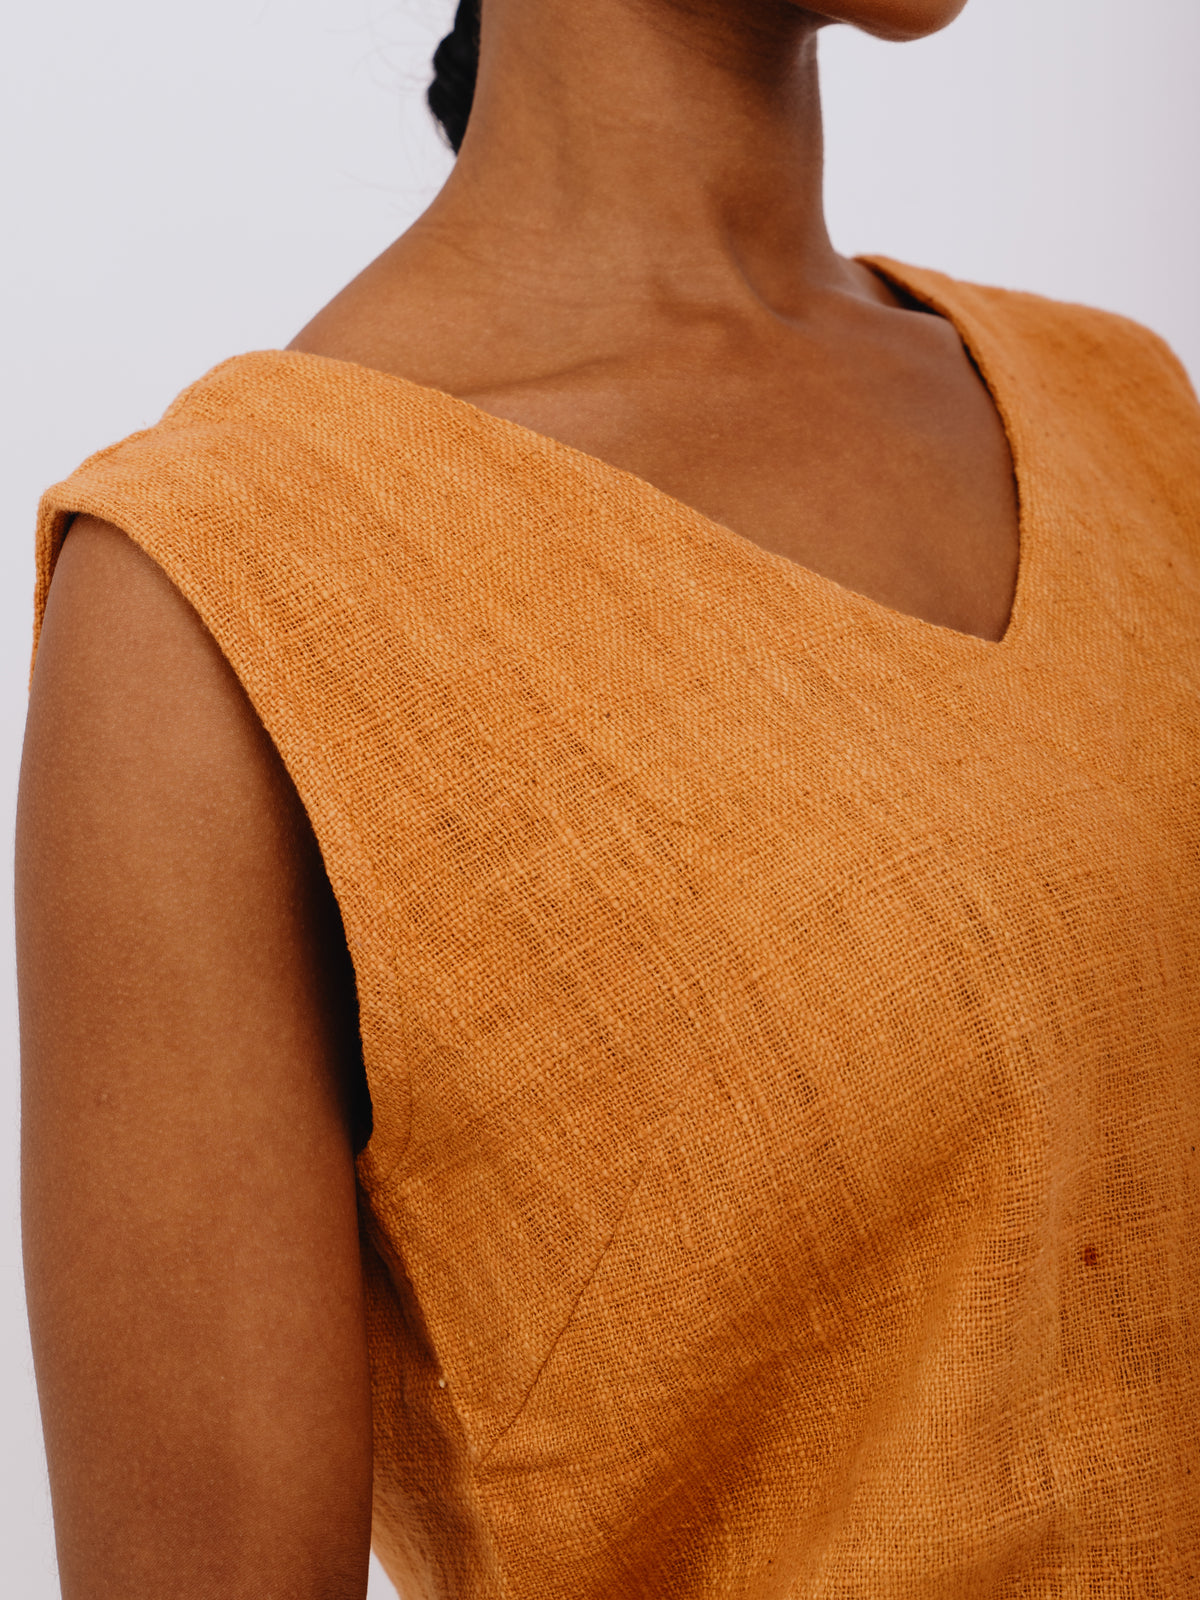 A V- neck Sleeveless Rust Orange top